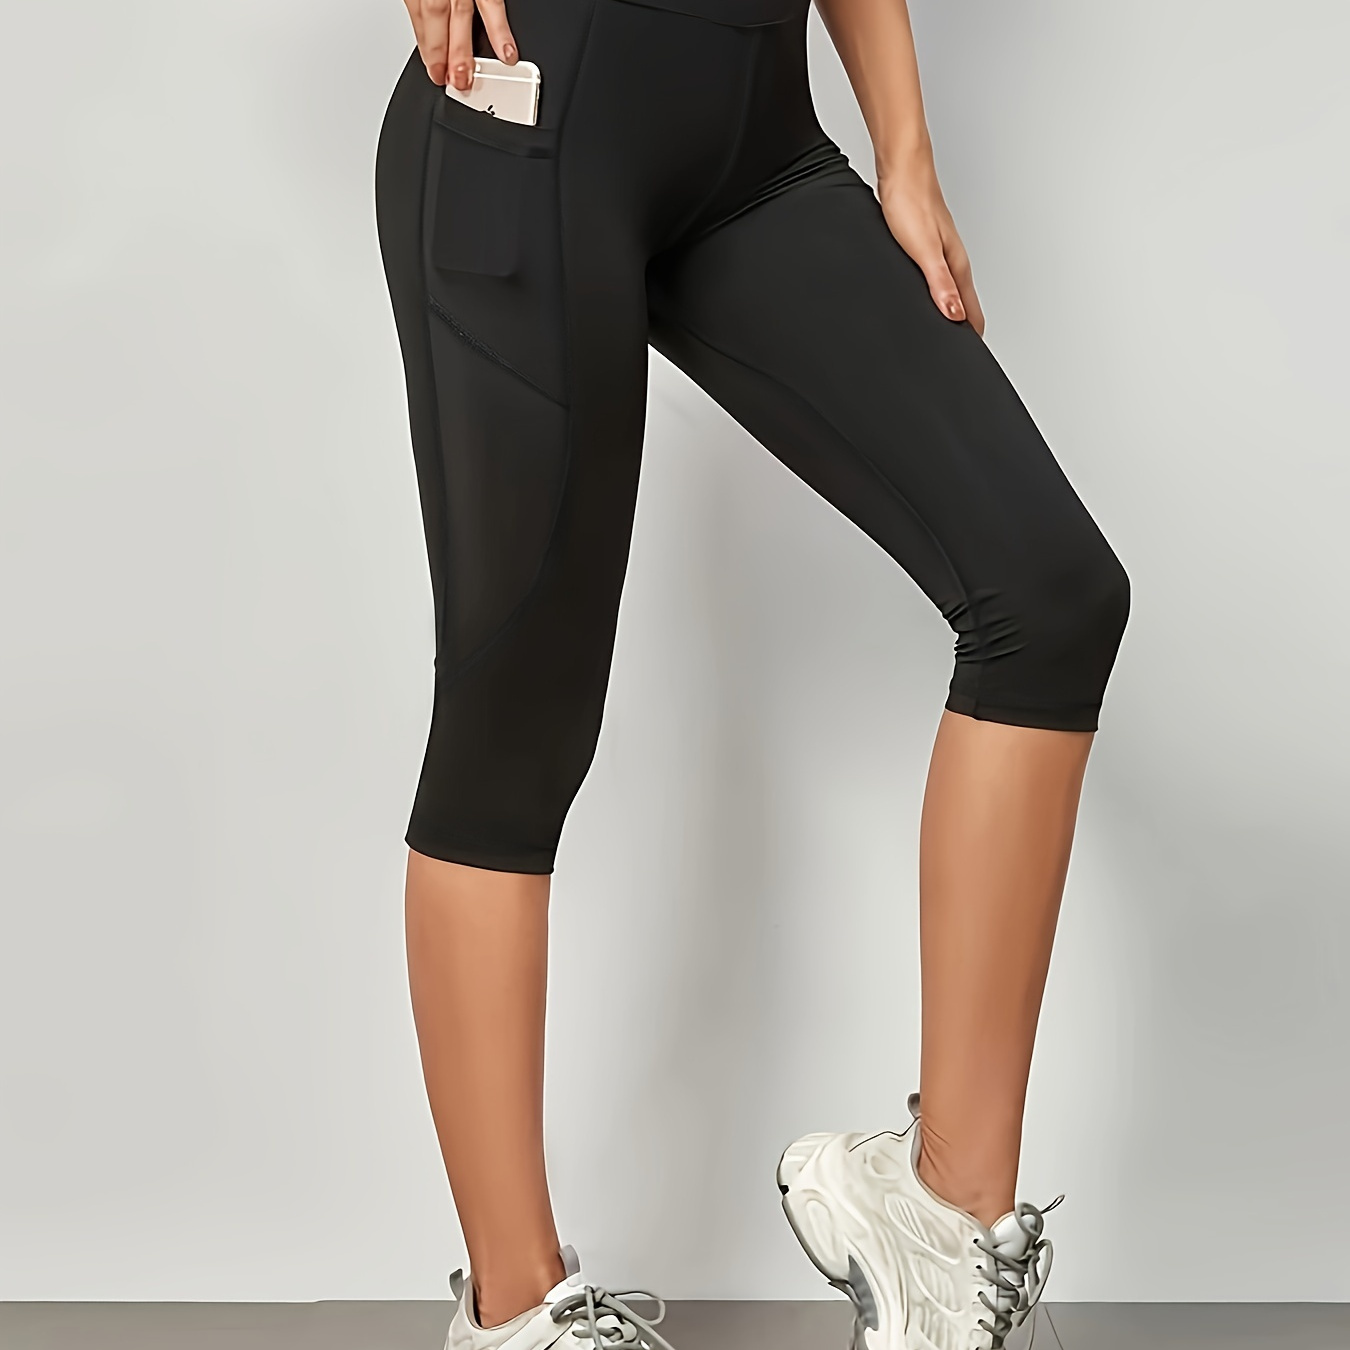 

Women's Solid Color Fashion Casual Capri Yoga Pants With Side Pockets, Comfort Fit Capri Athletic Leggings, Women's Activewear